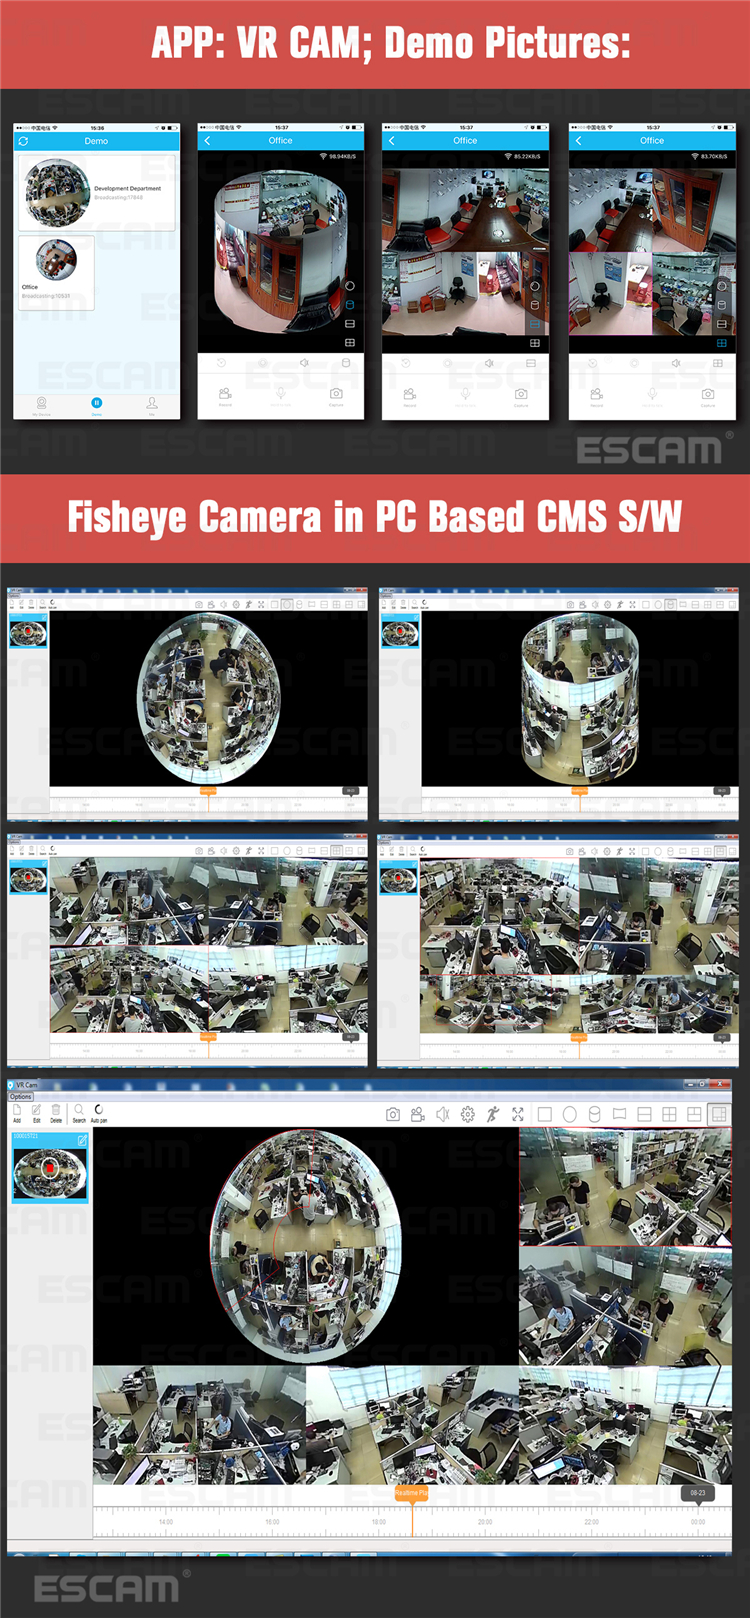 ESCAM Fisheye Camera Support VR QP180 Shark 960P IP WiFi Camera 1.3MP 360 Degree Panoramic Infrared Night Vision Camera 36